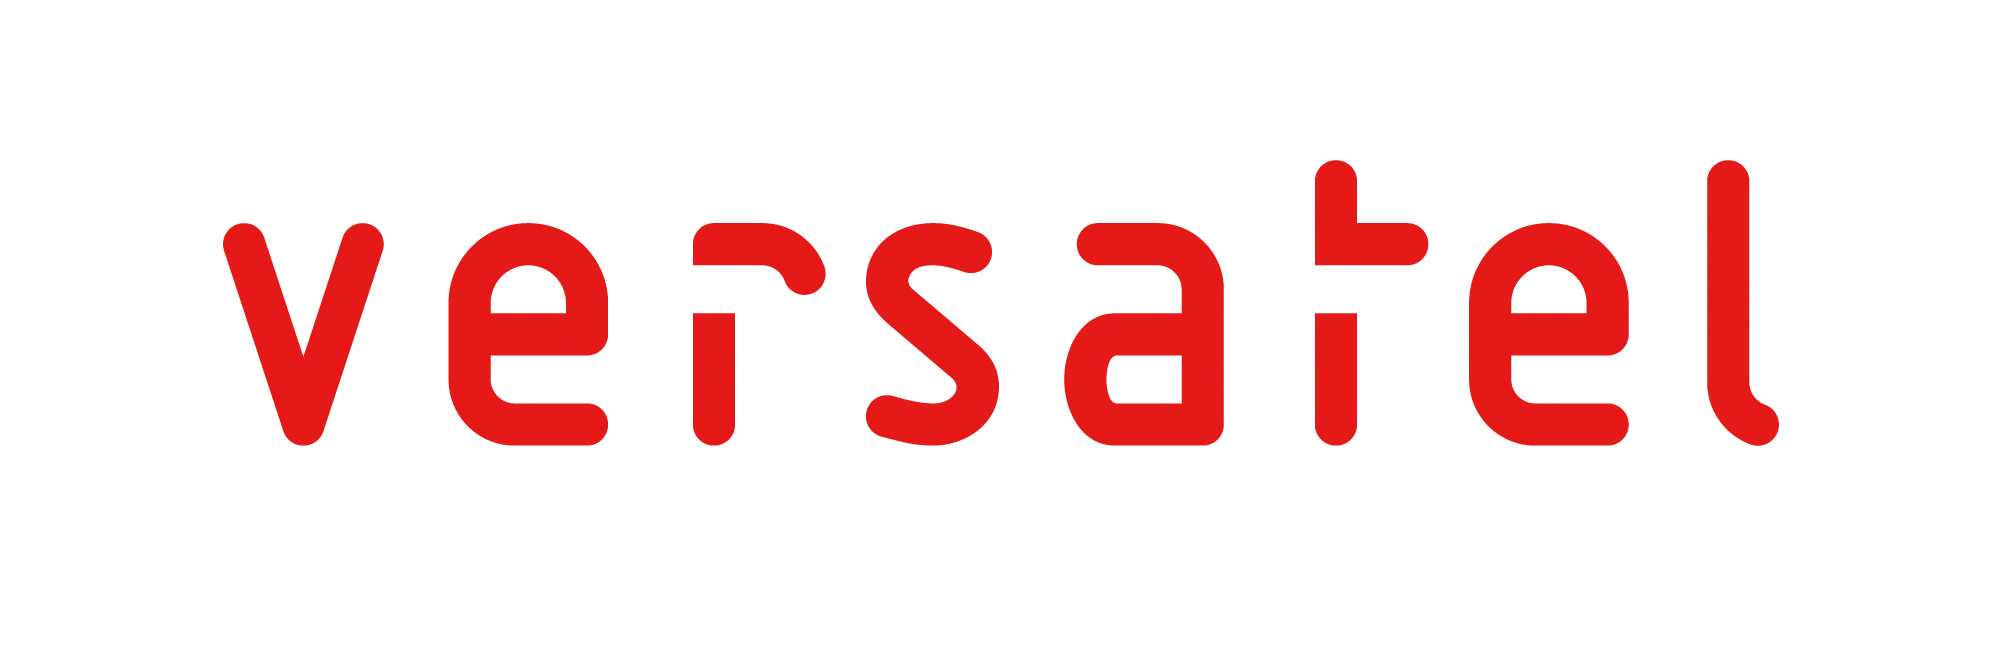 Versatel Logo photo - 1